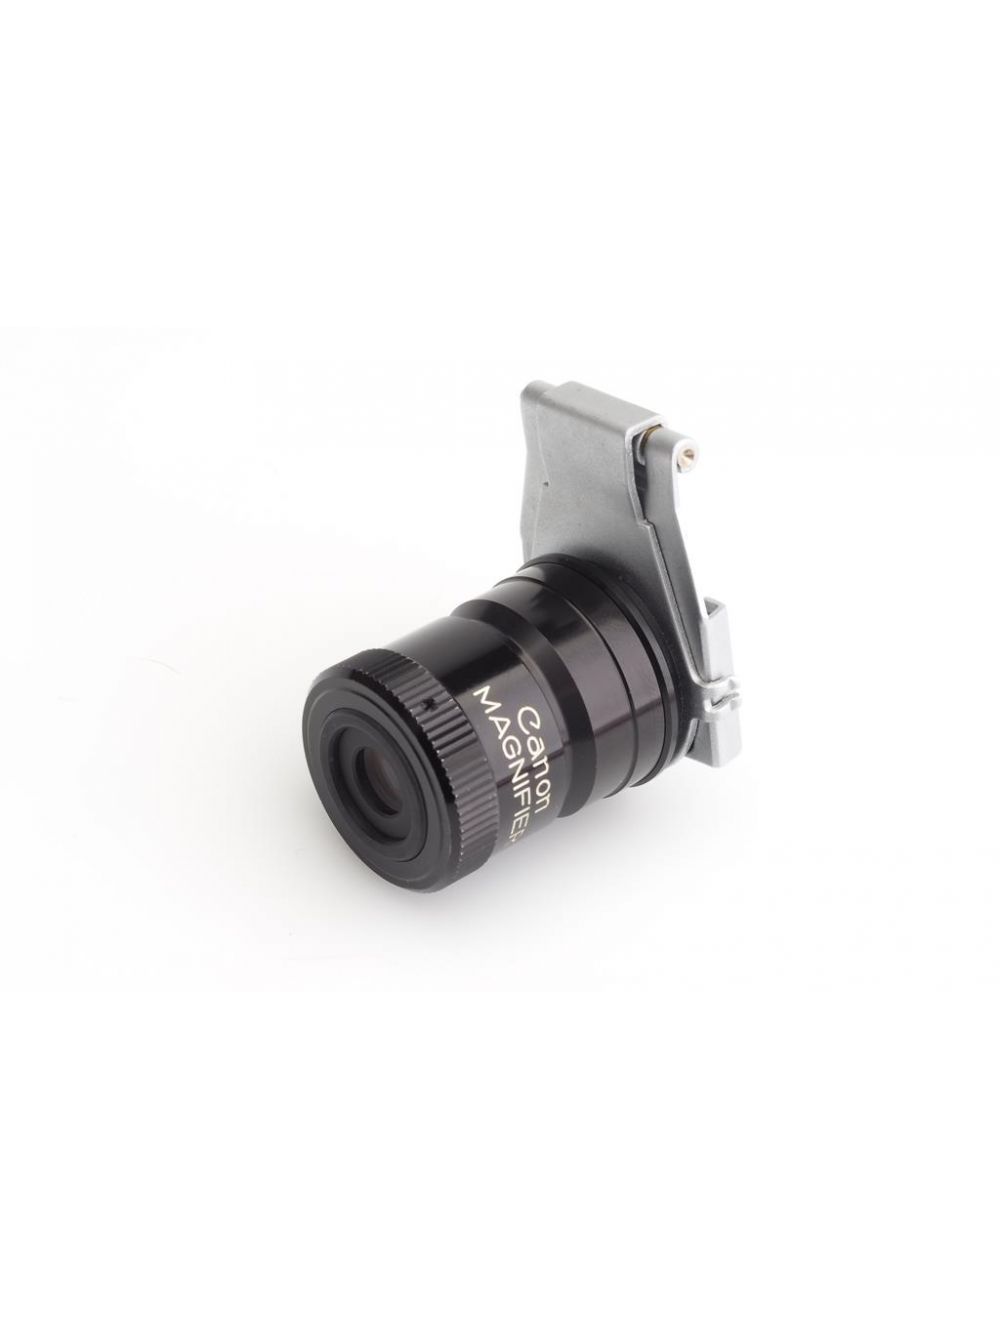 Canon Magnifier S w. Adapter S f. A-1 AE-1 | JO GEIER - MINT  RARE